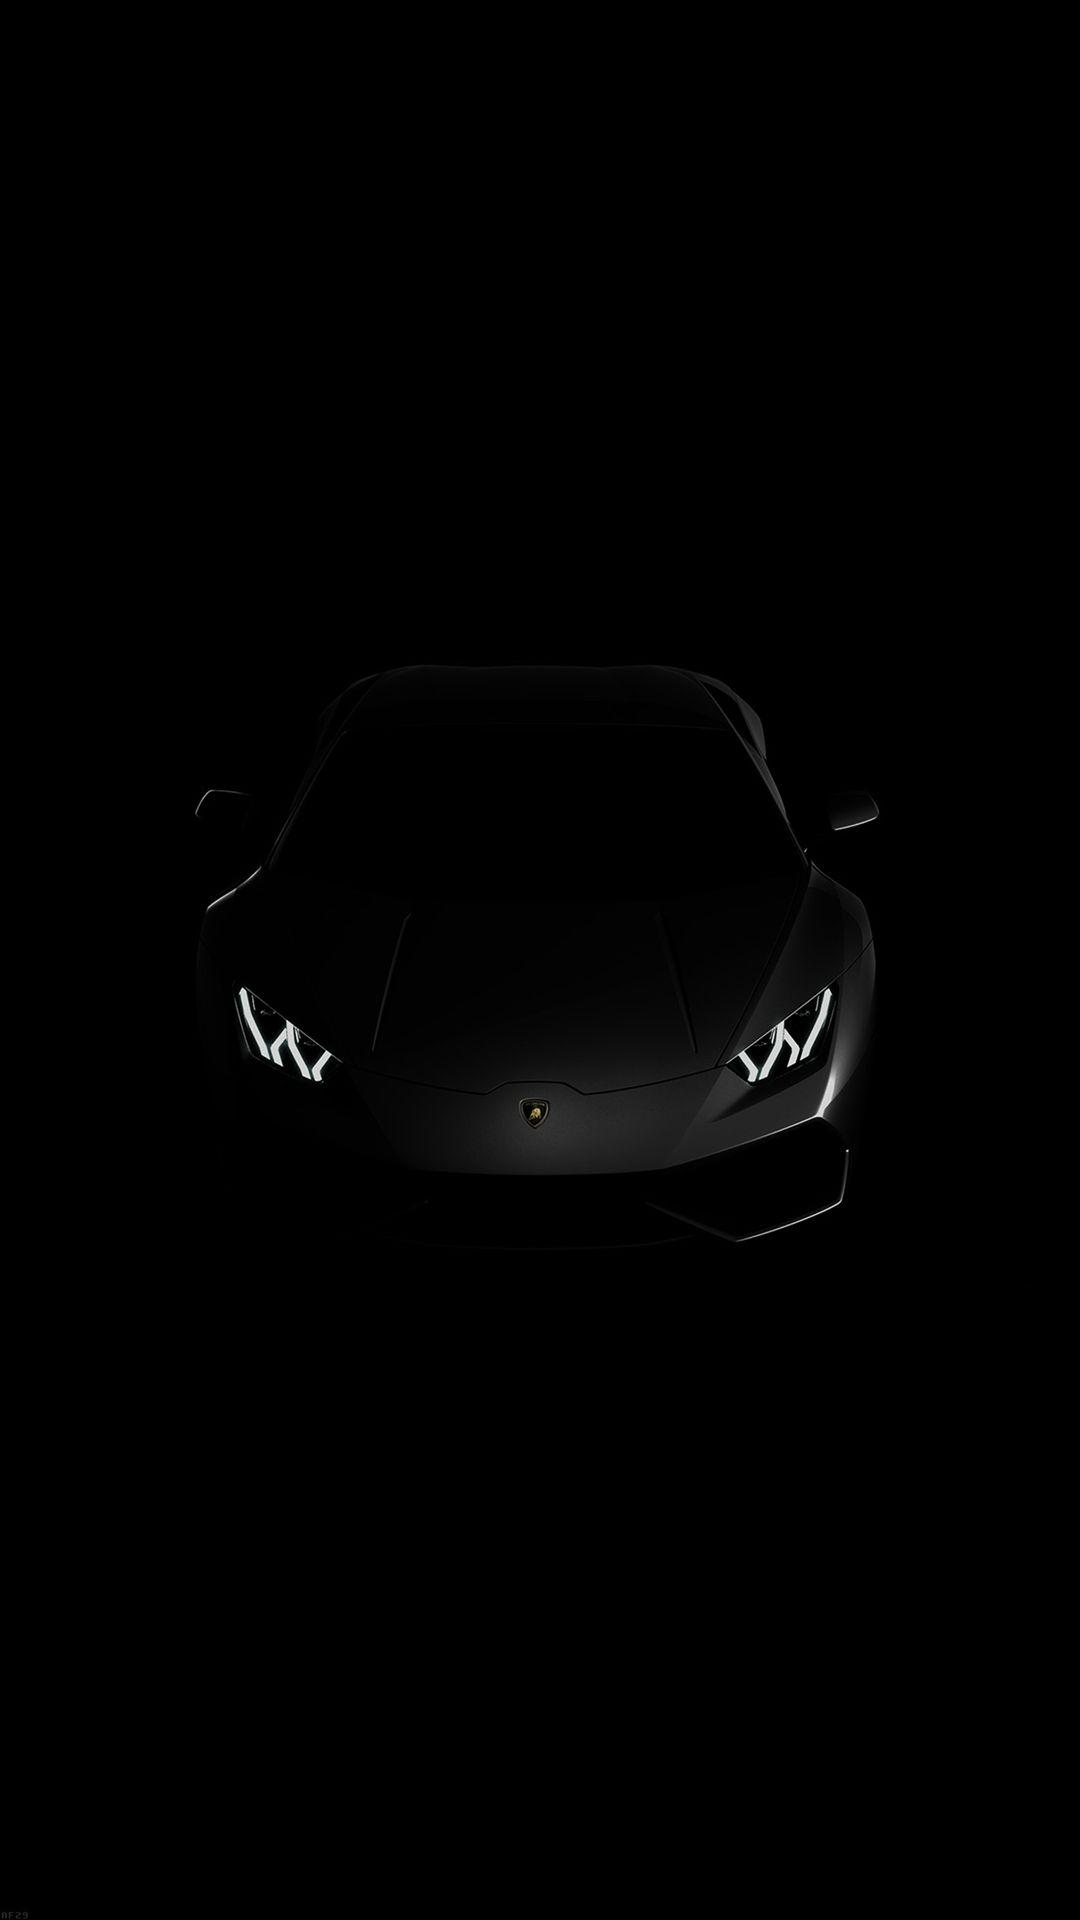 Lamborghini Huracan Lp Black Dark iPhone 8 Wallpaper. Lamborghini aventador wallpaper, Car iphone wallpaper, Black car wallpaper